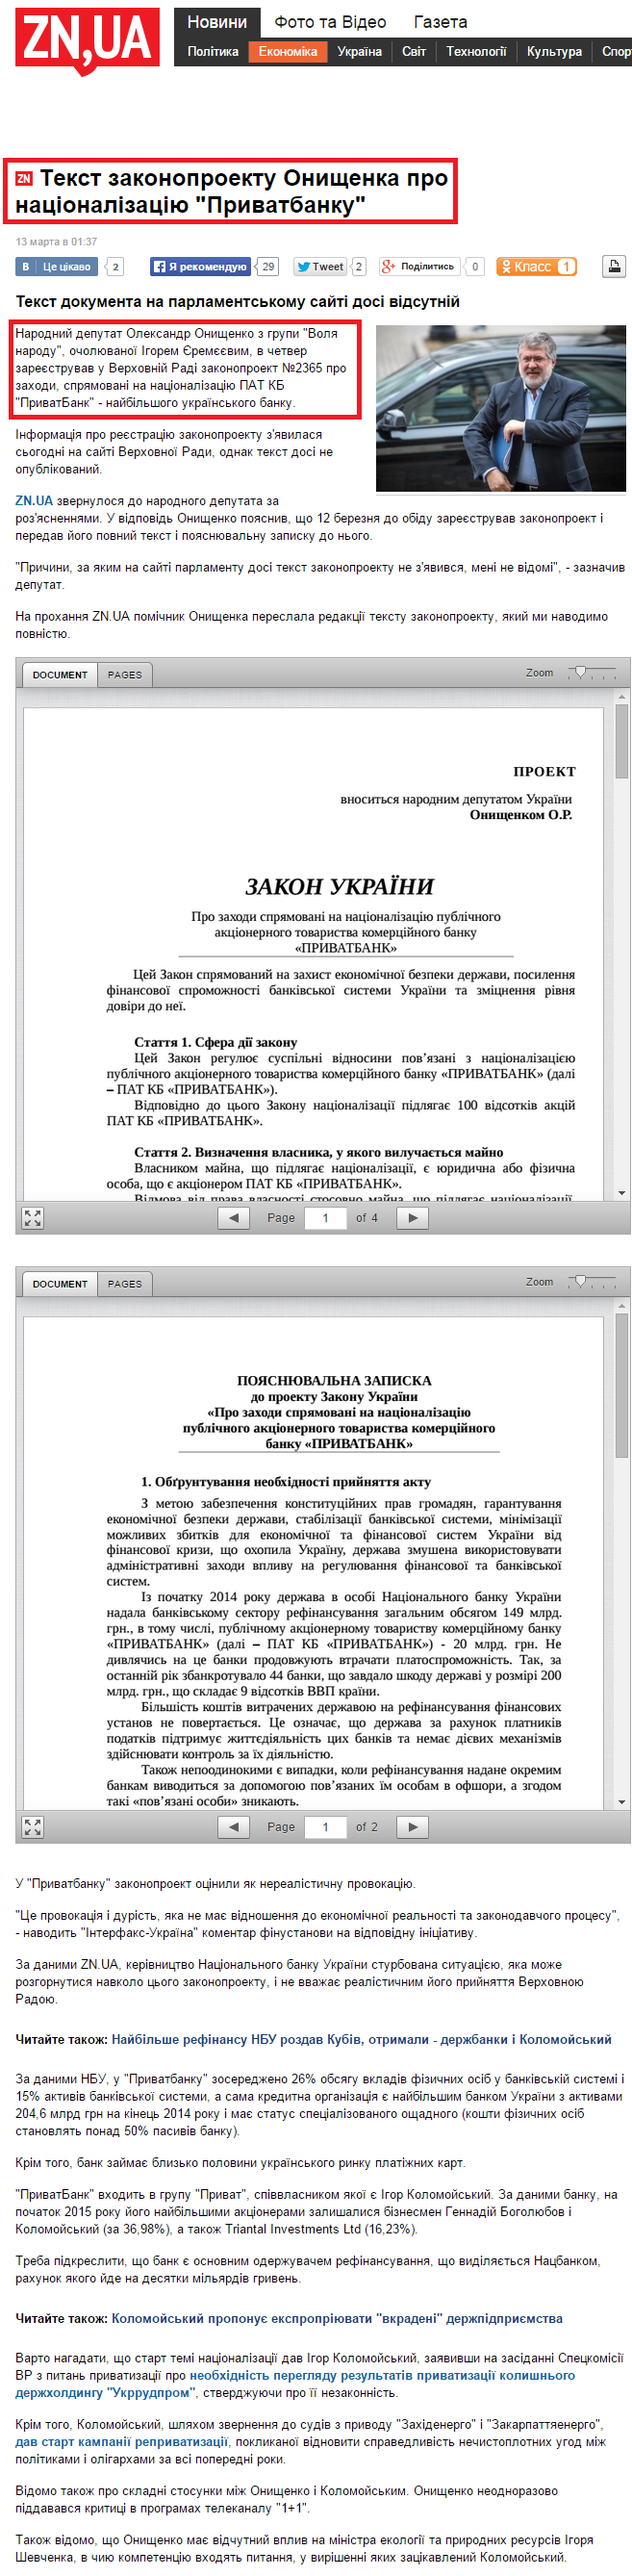 http://dt.ua/ECONOMICS/tekst-zakonoproektu-onischenko-pro-nacionalizaciyu-privatbanku-166722_.html